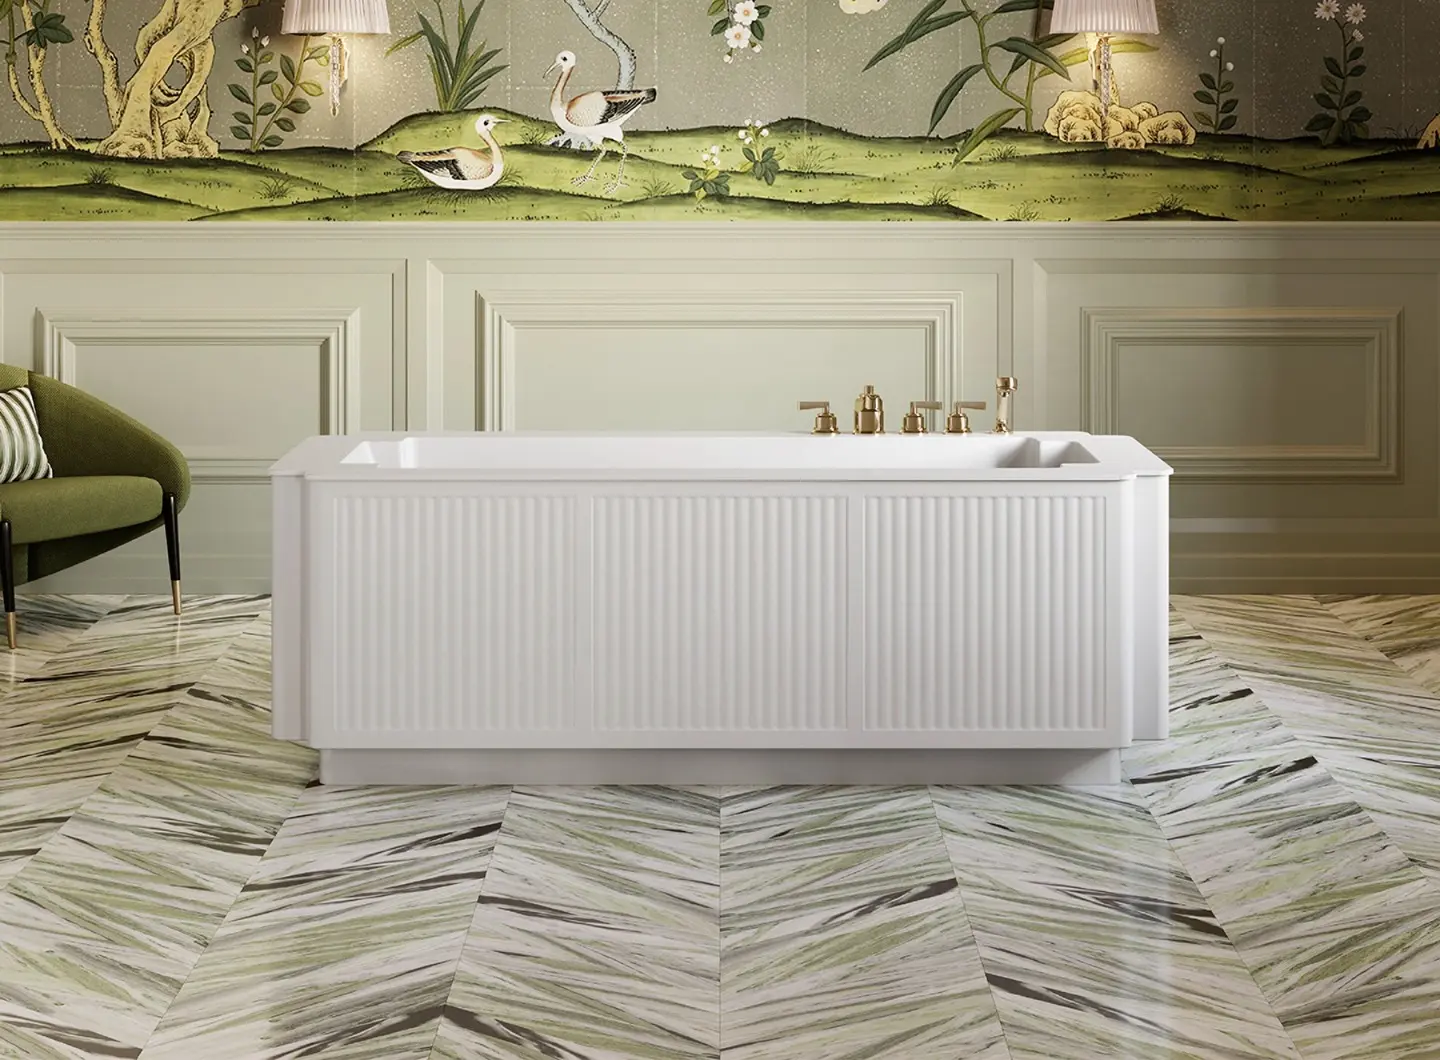 The Thirties bathtub - Design by Pierre-Yves Rochon